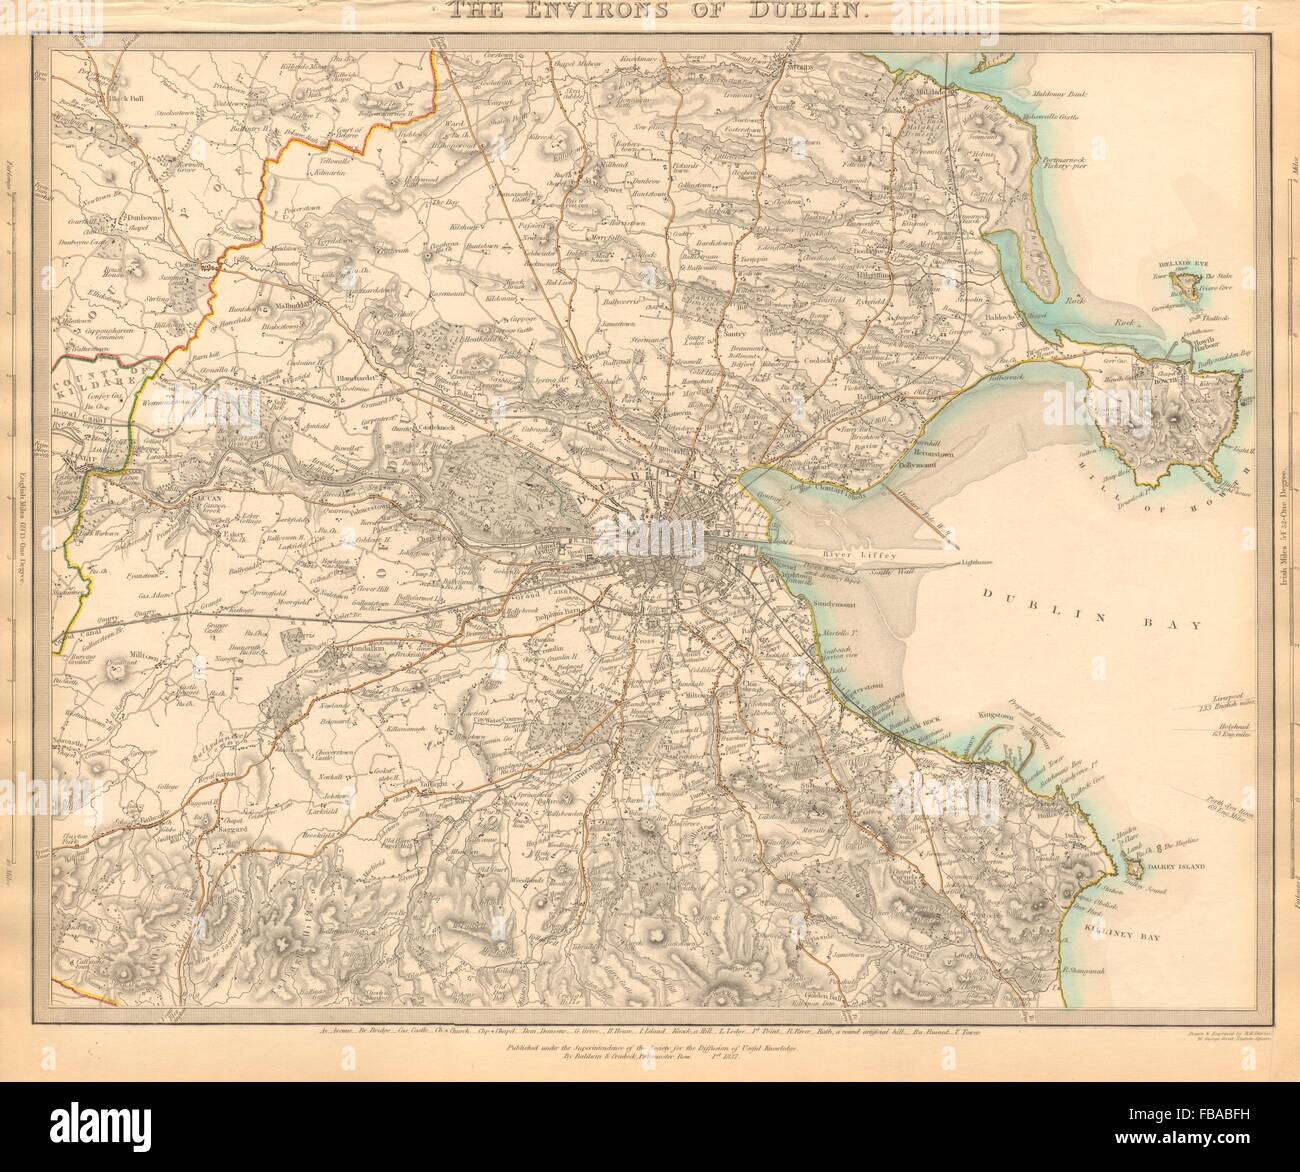 IRELAND. The environs of Dublin. SDUK, 1844 antique map Stock Photo